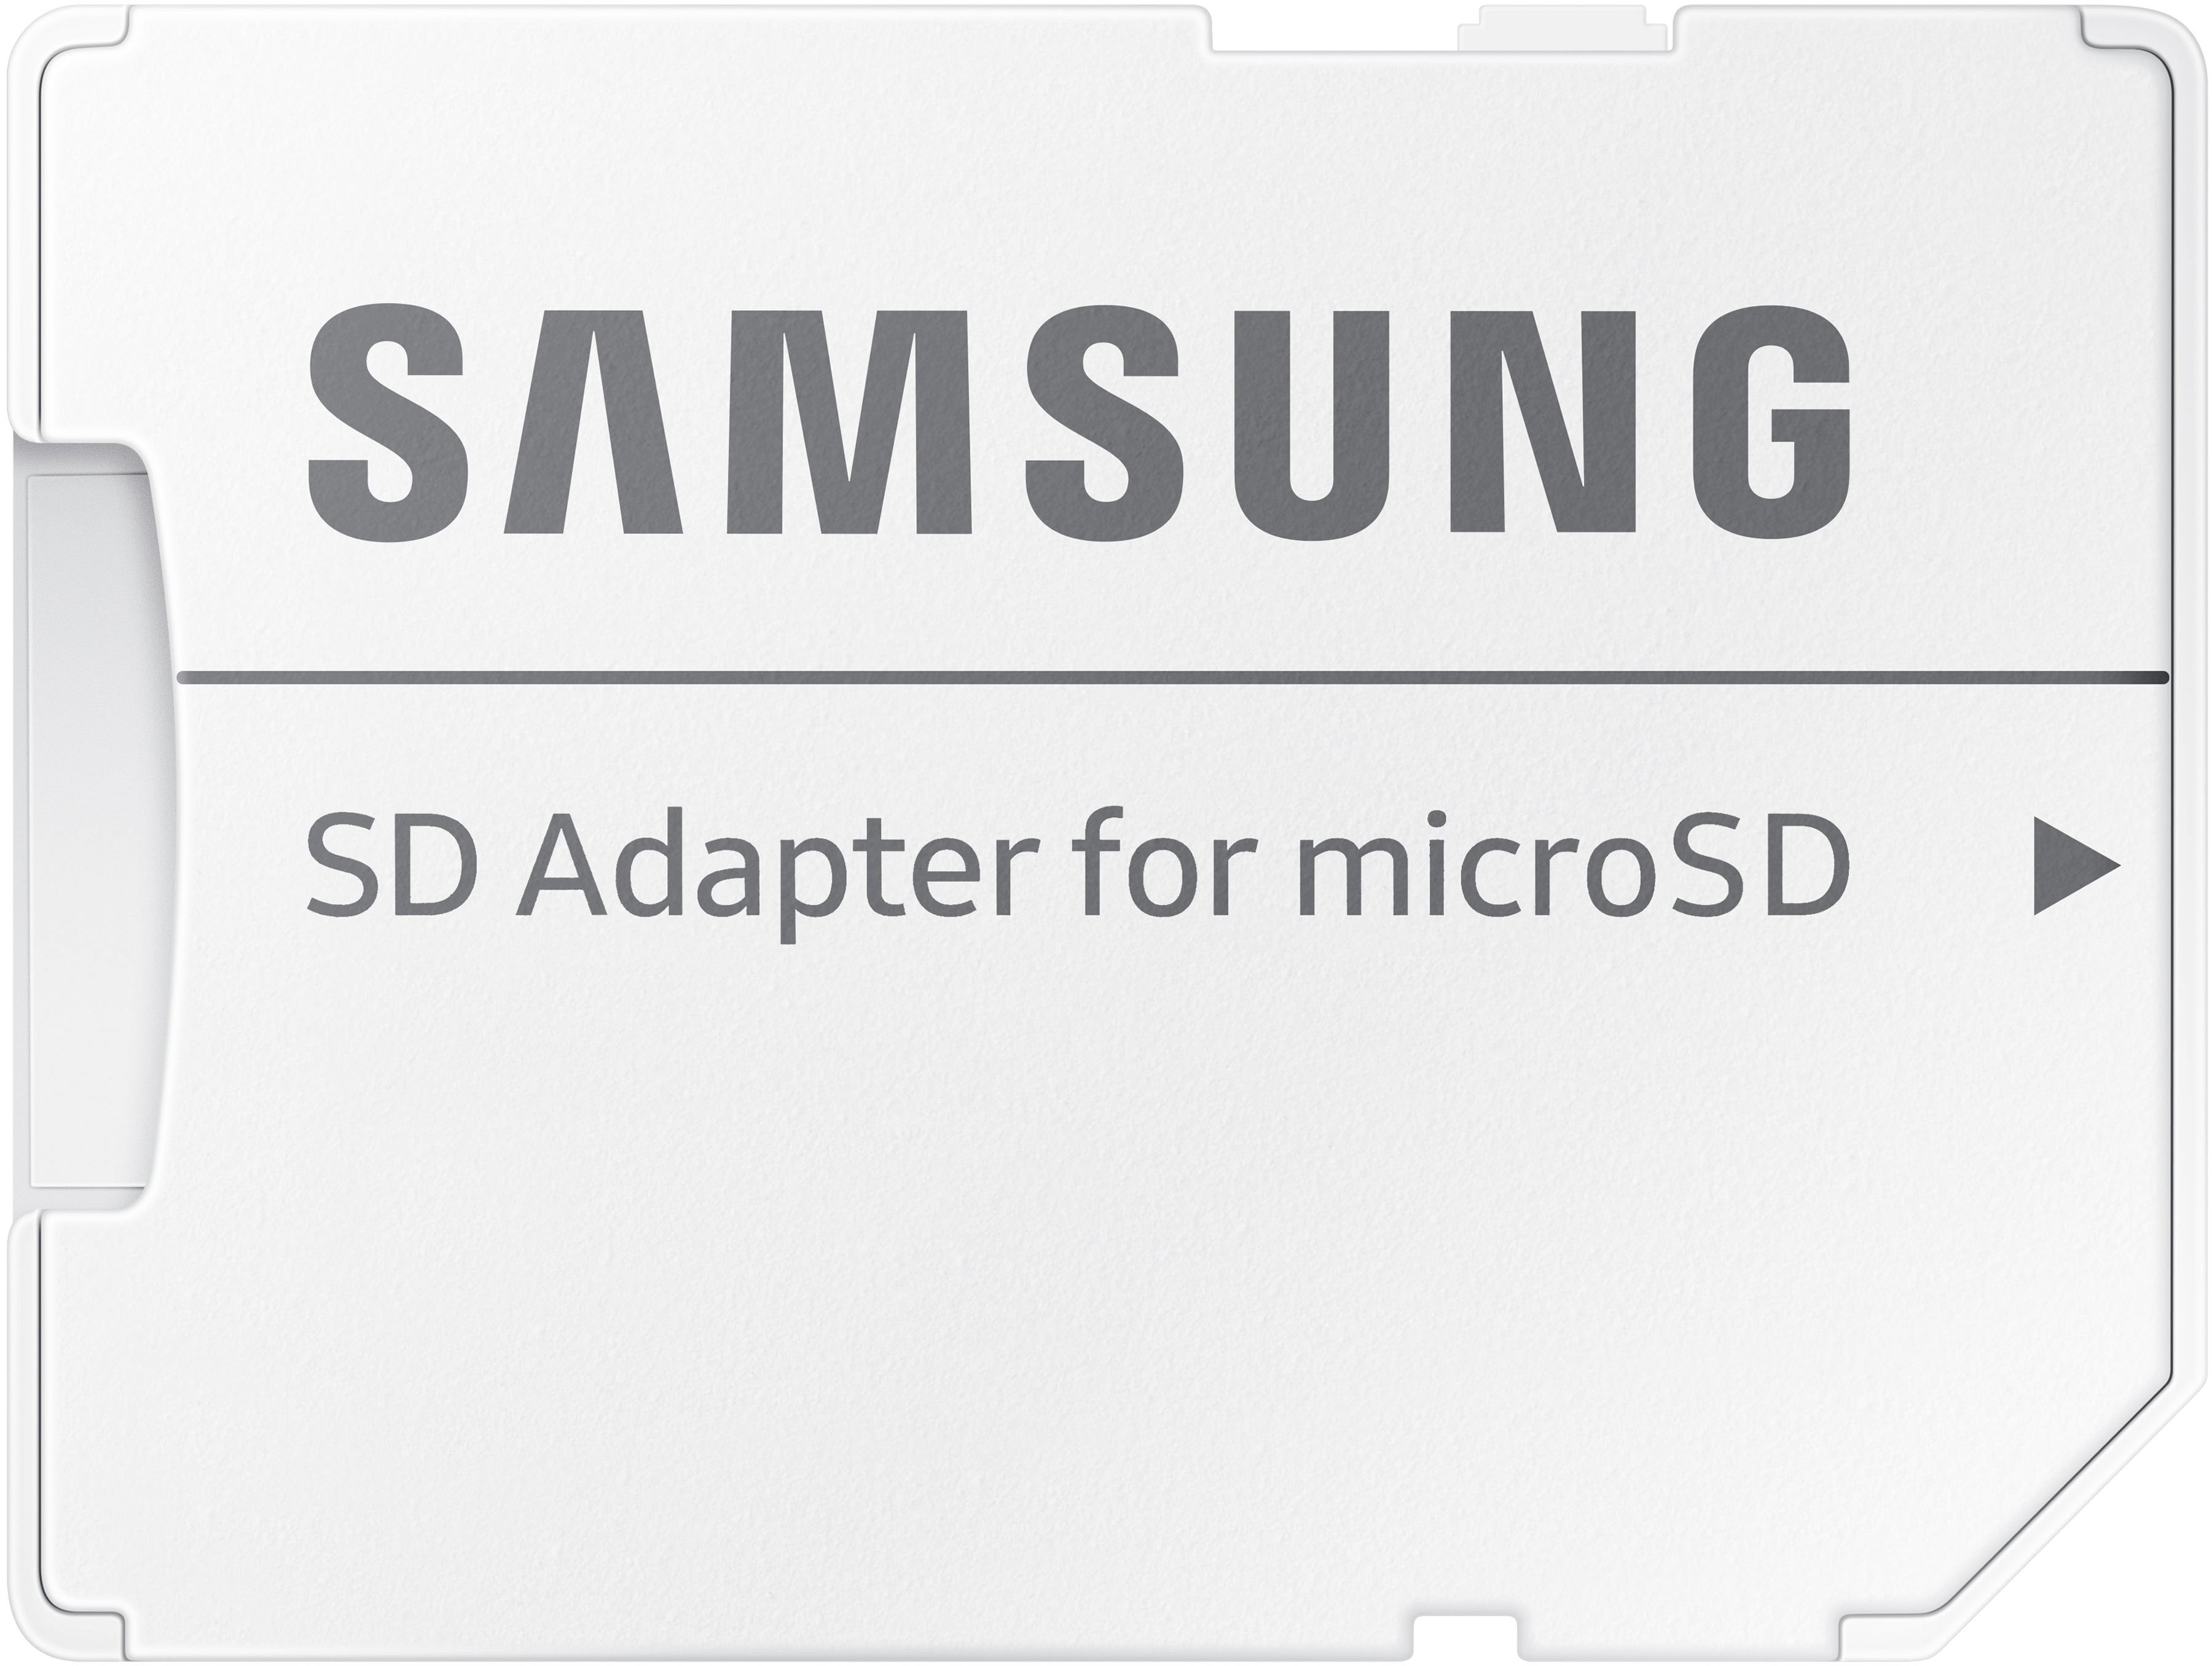 SAMSUNG microSD EVO PLUS 512Go Class10 Read up to 130Mo/s BE (P)